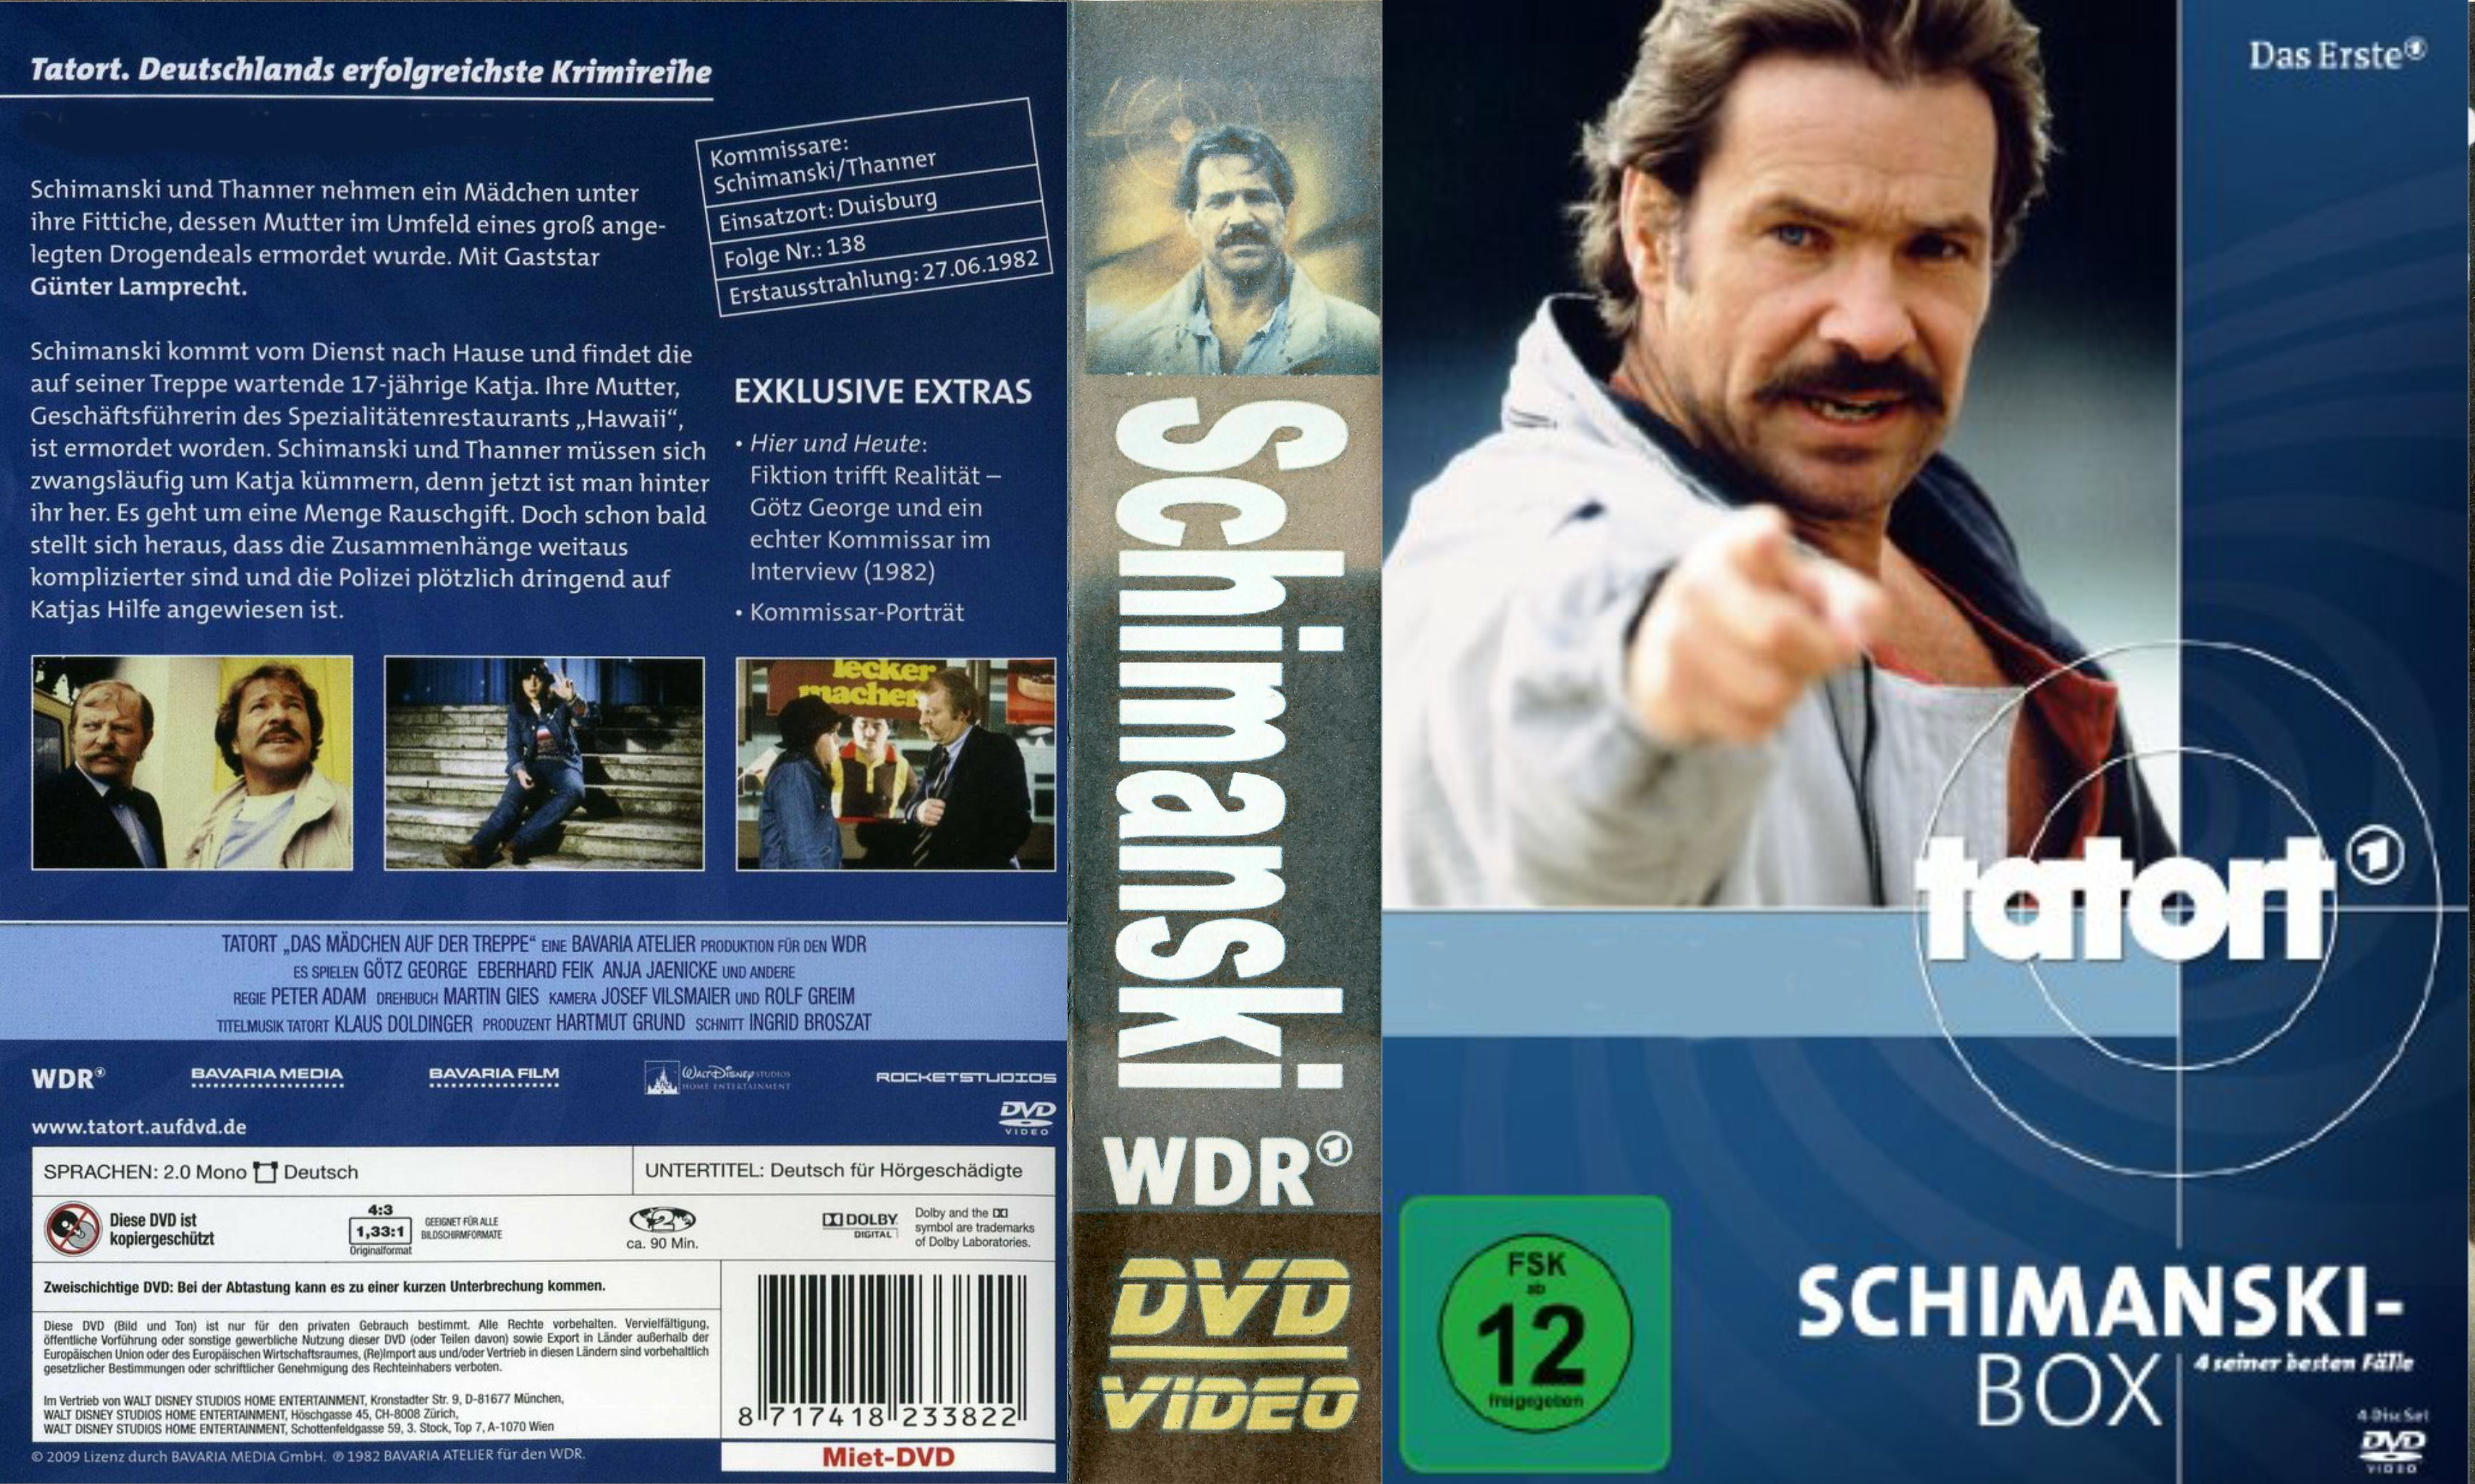 Schimanski Collectie Tatort No Subs - DvD 13